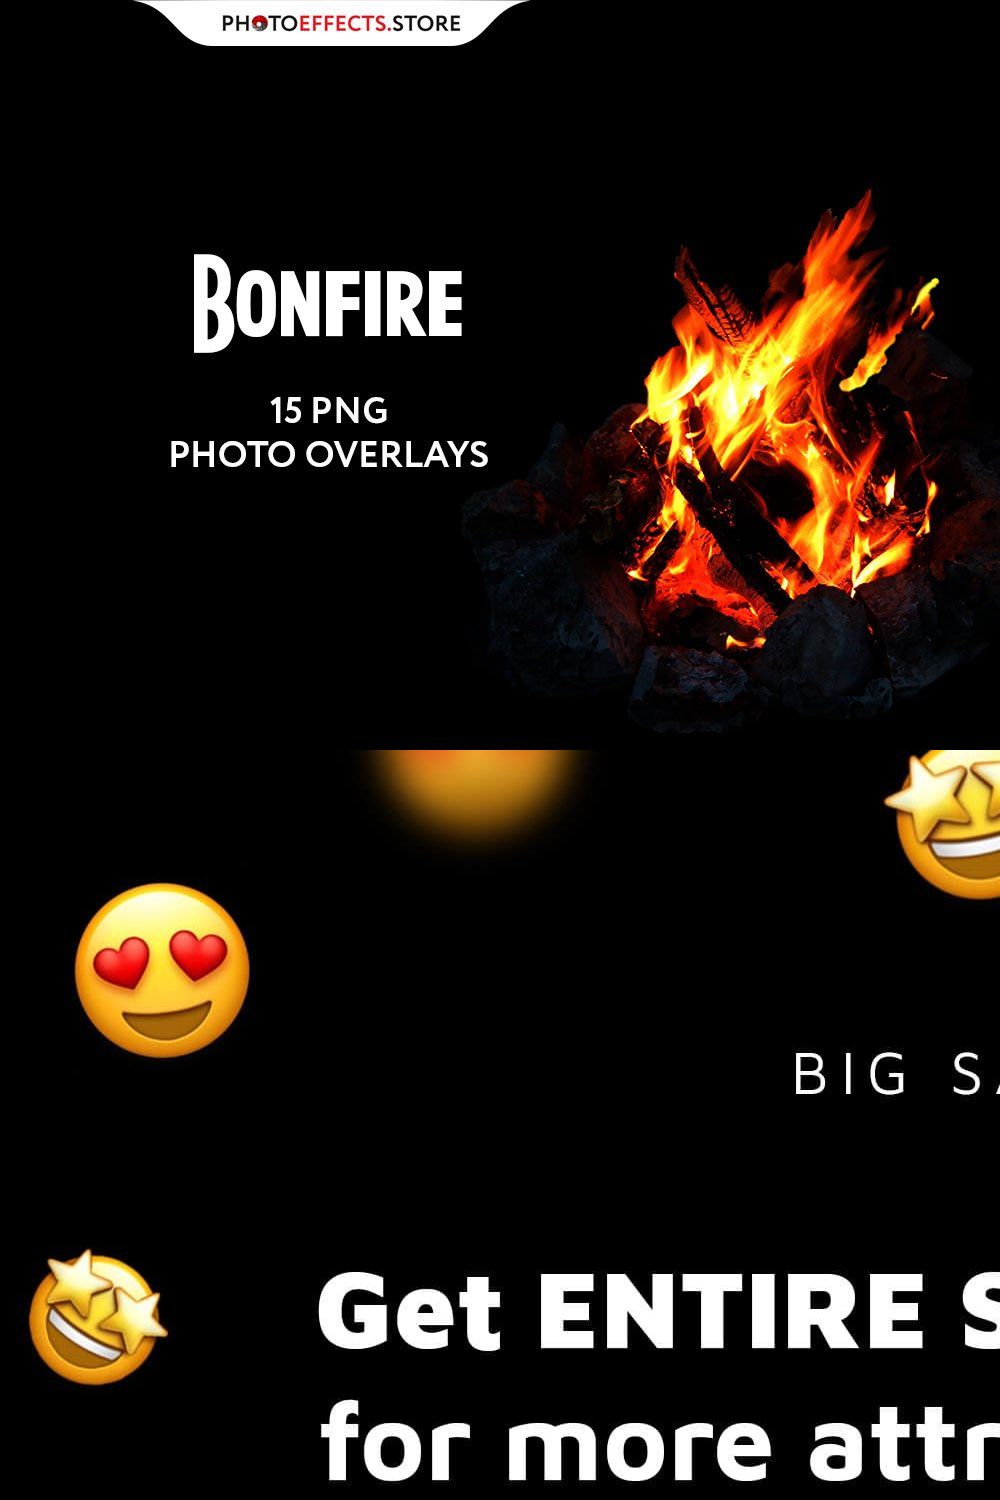 +15 Bonfire Photo Overlays pinterest preview image.